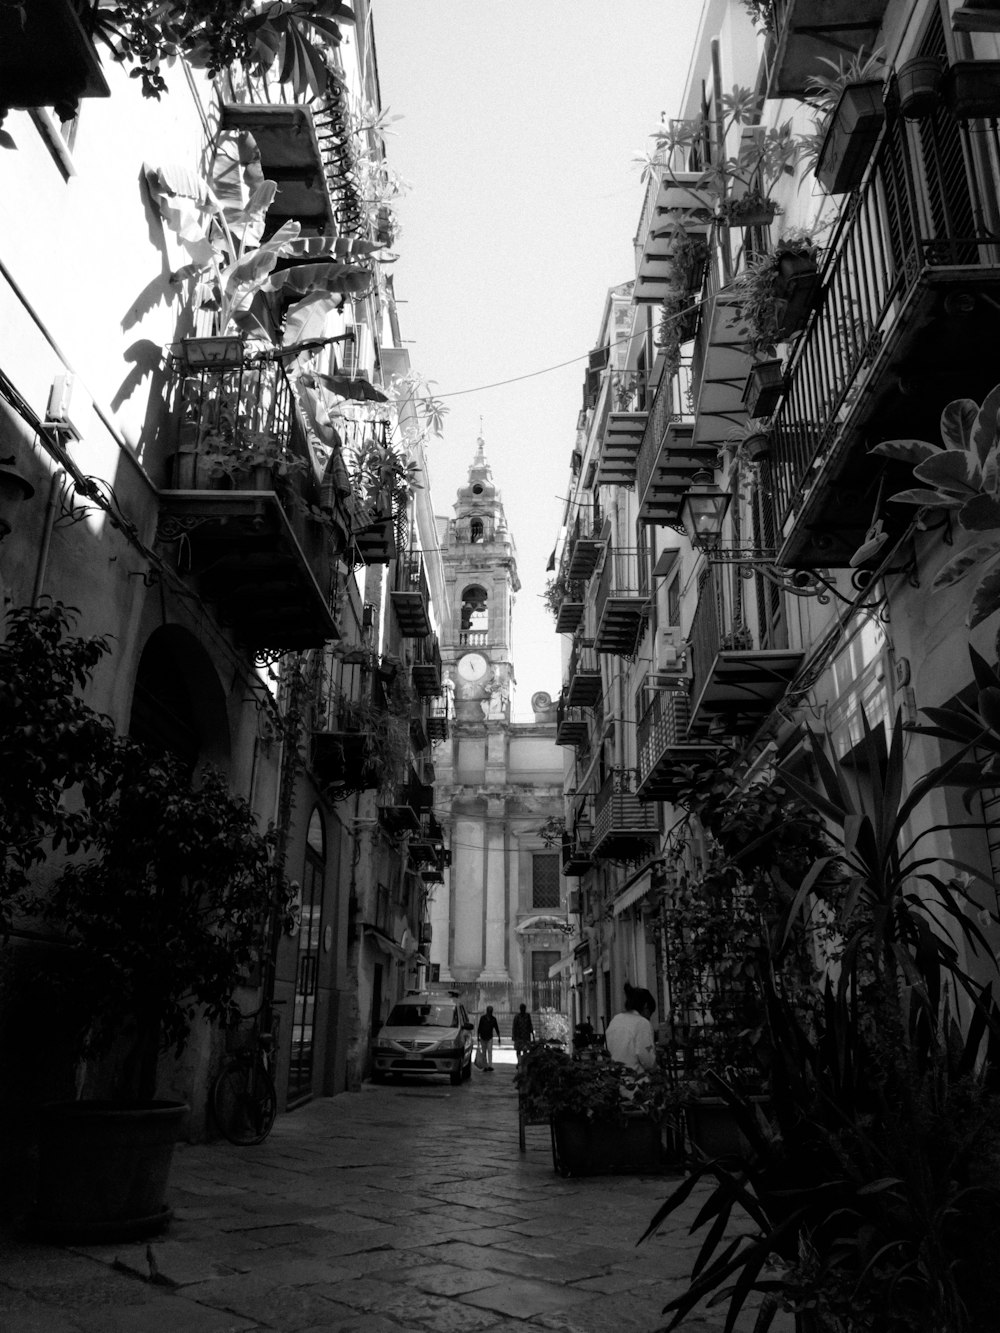 a black and white photo of a narrow city street